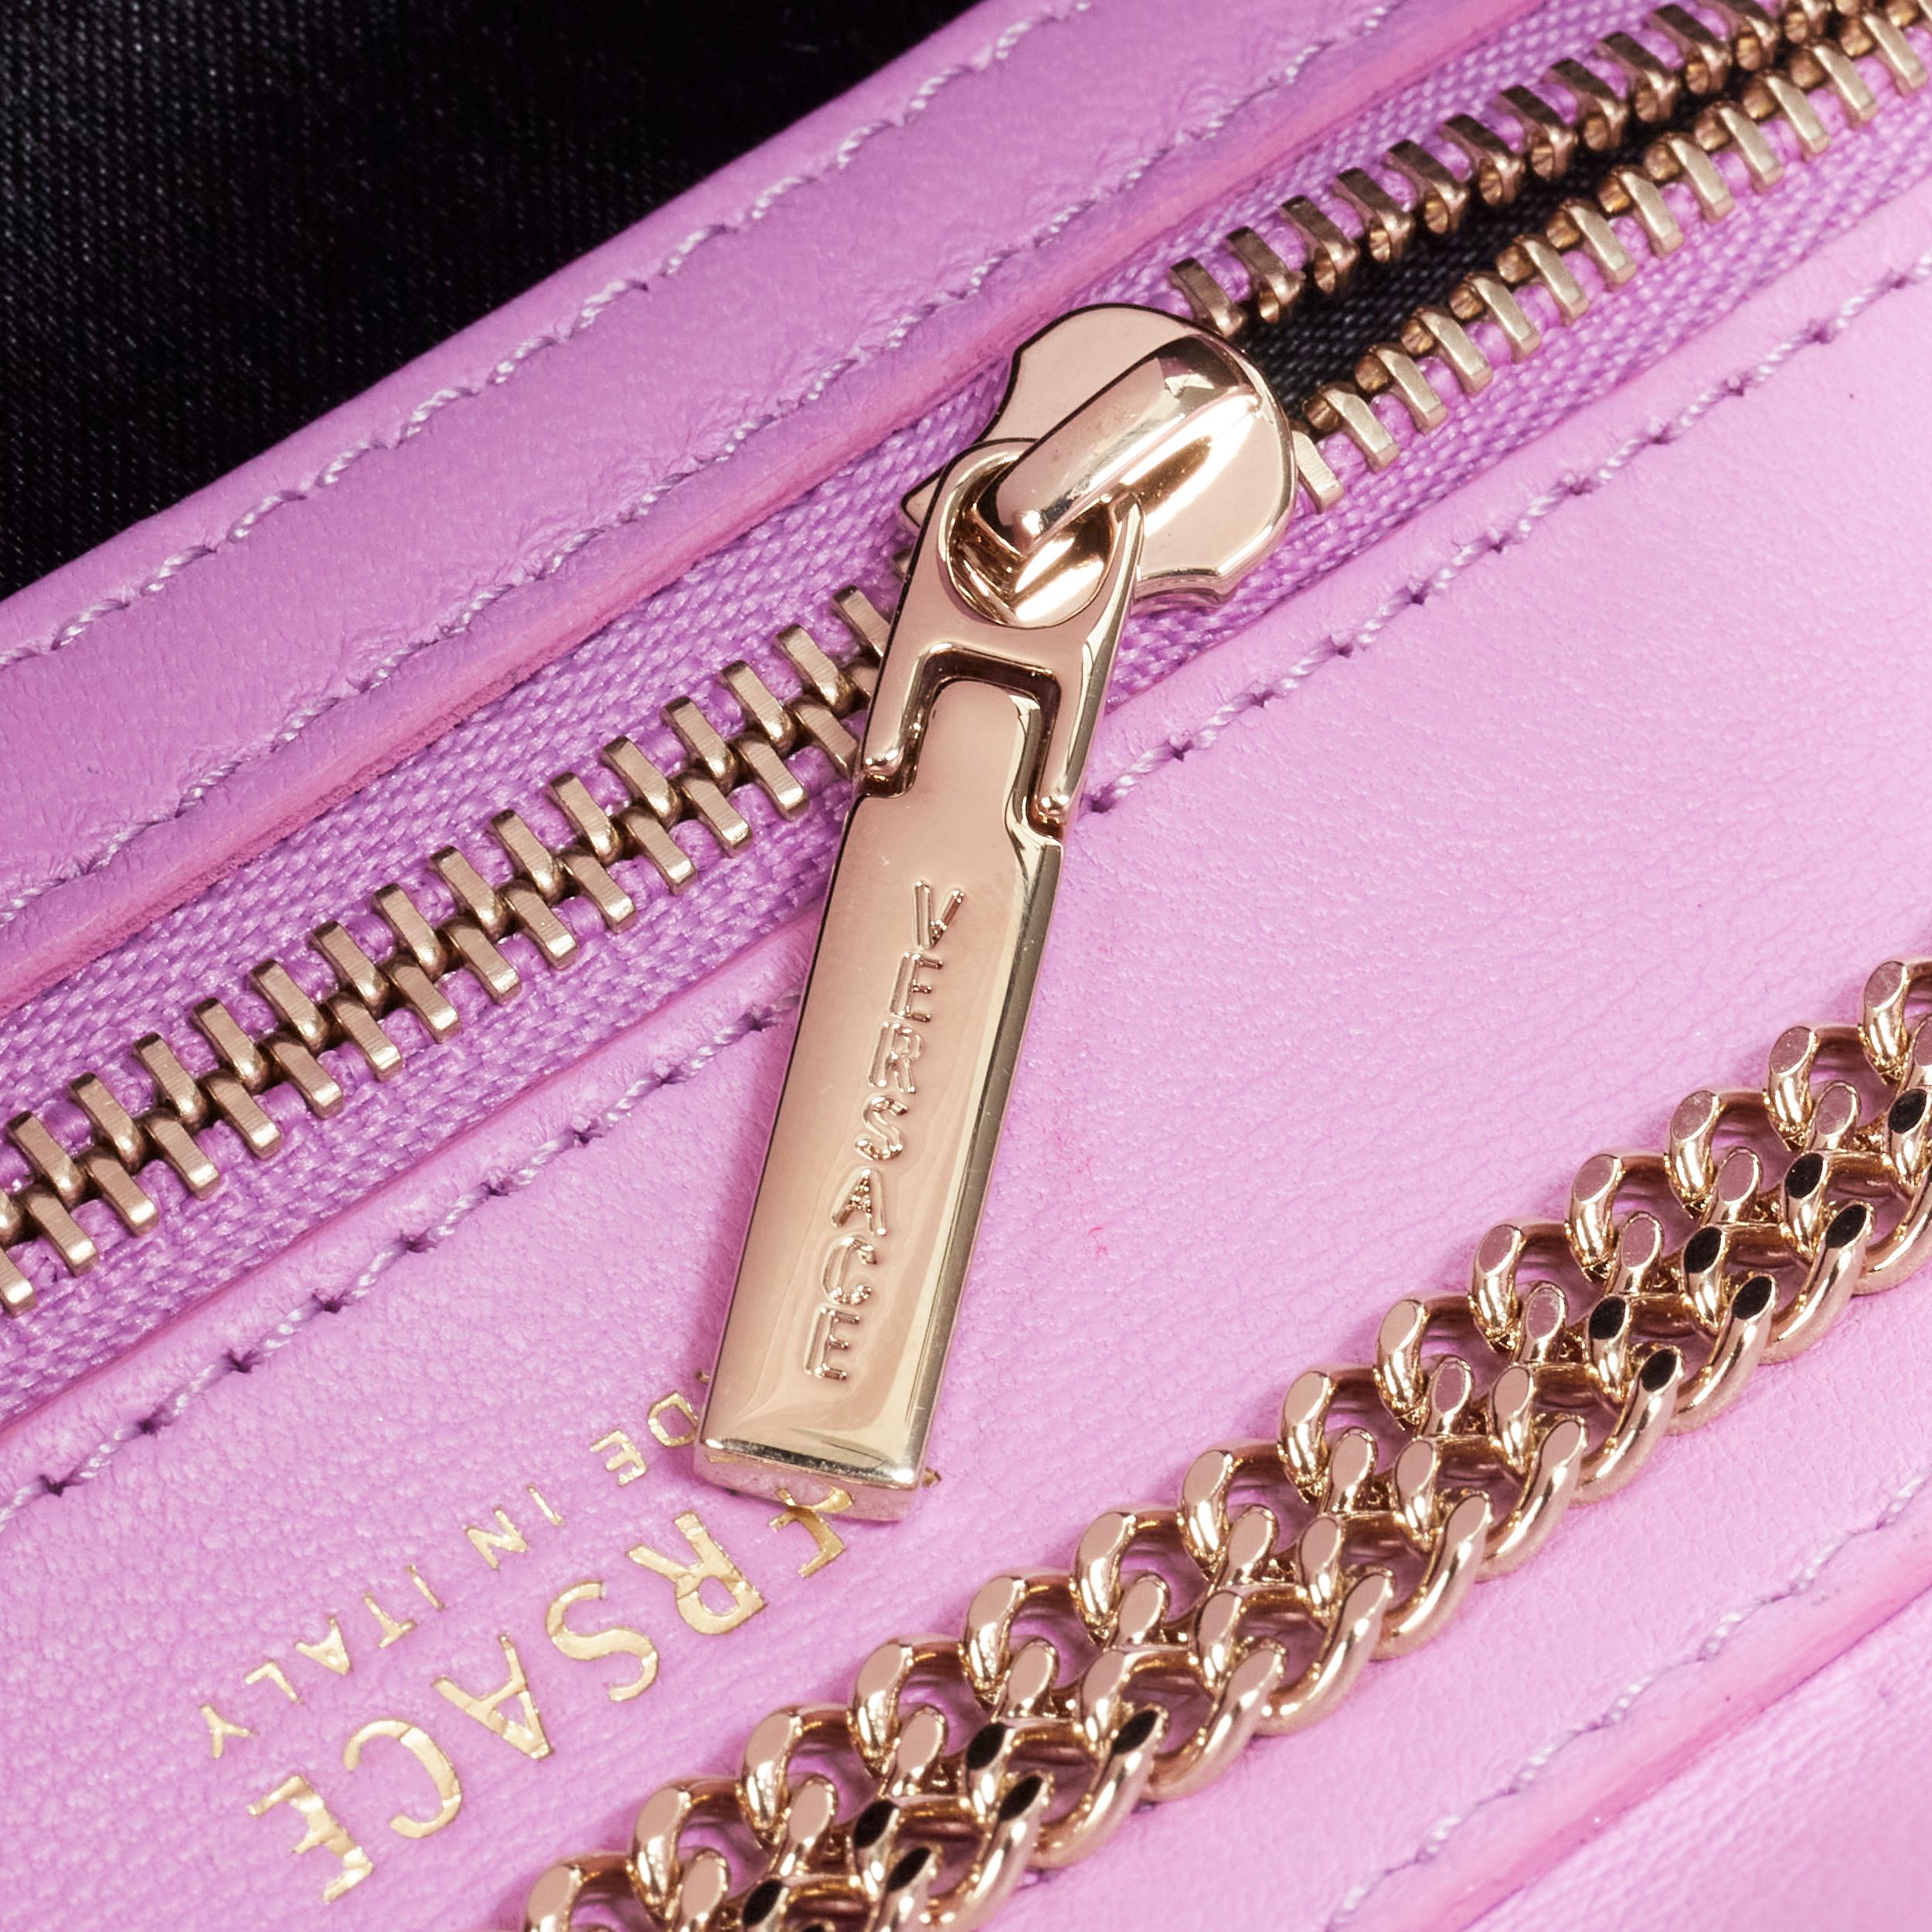 new VERSACE Palazzo Medusa lilac purple patent gold wallet chain crossbody bag 6